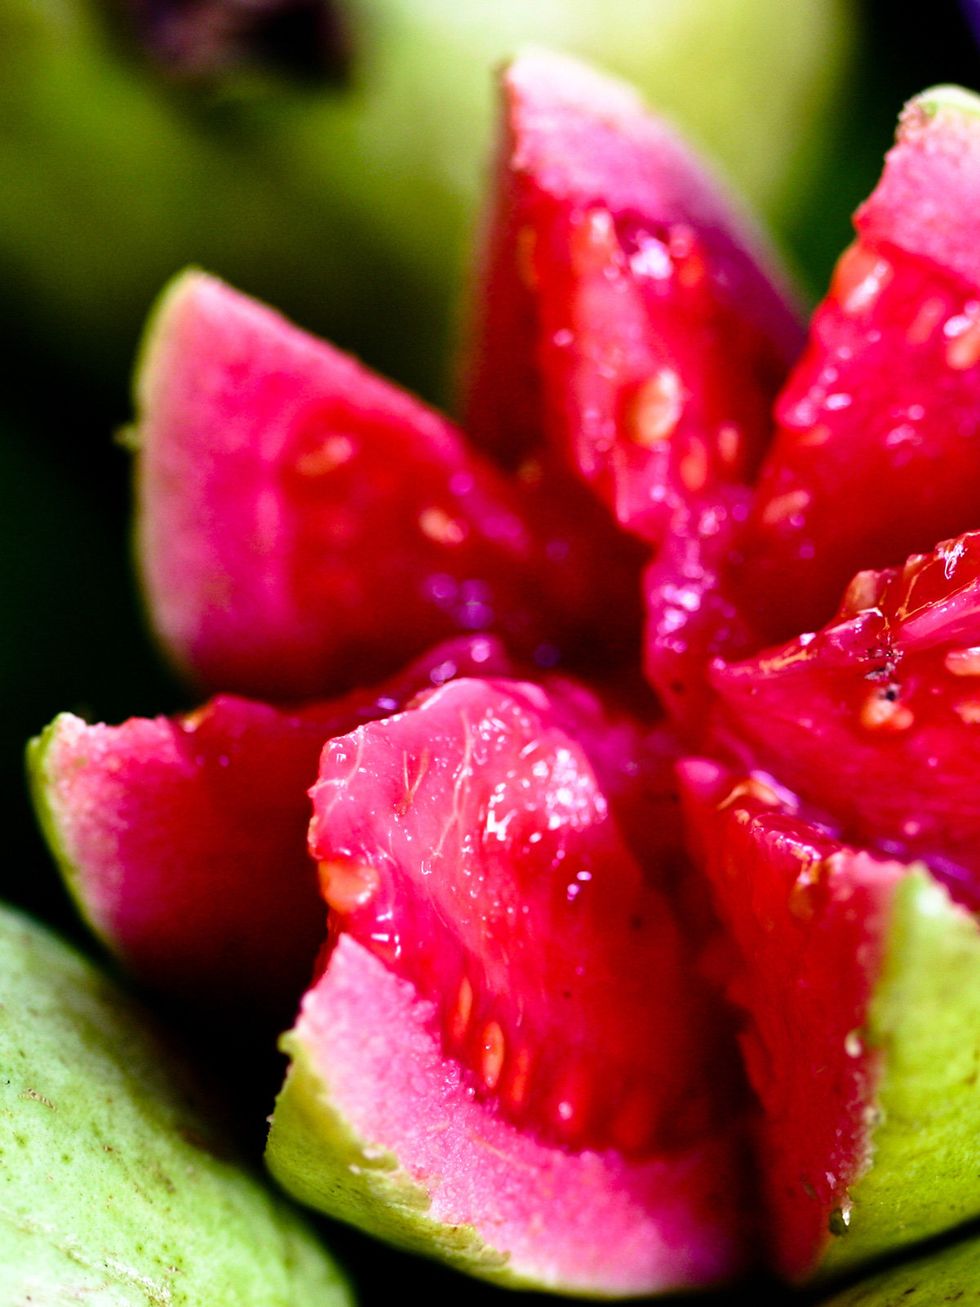 Plant, Food, Close-up, Fruit, Sweetness, Flowering plant, Flower, Natural foods, Watermelon, Ingredient, 